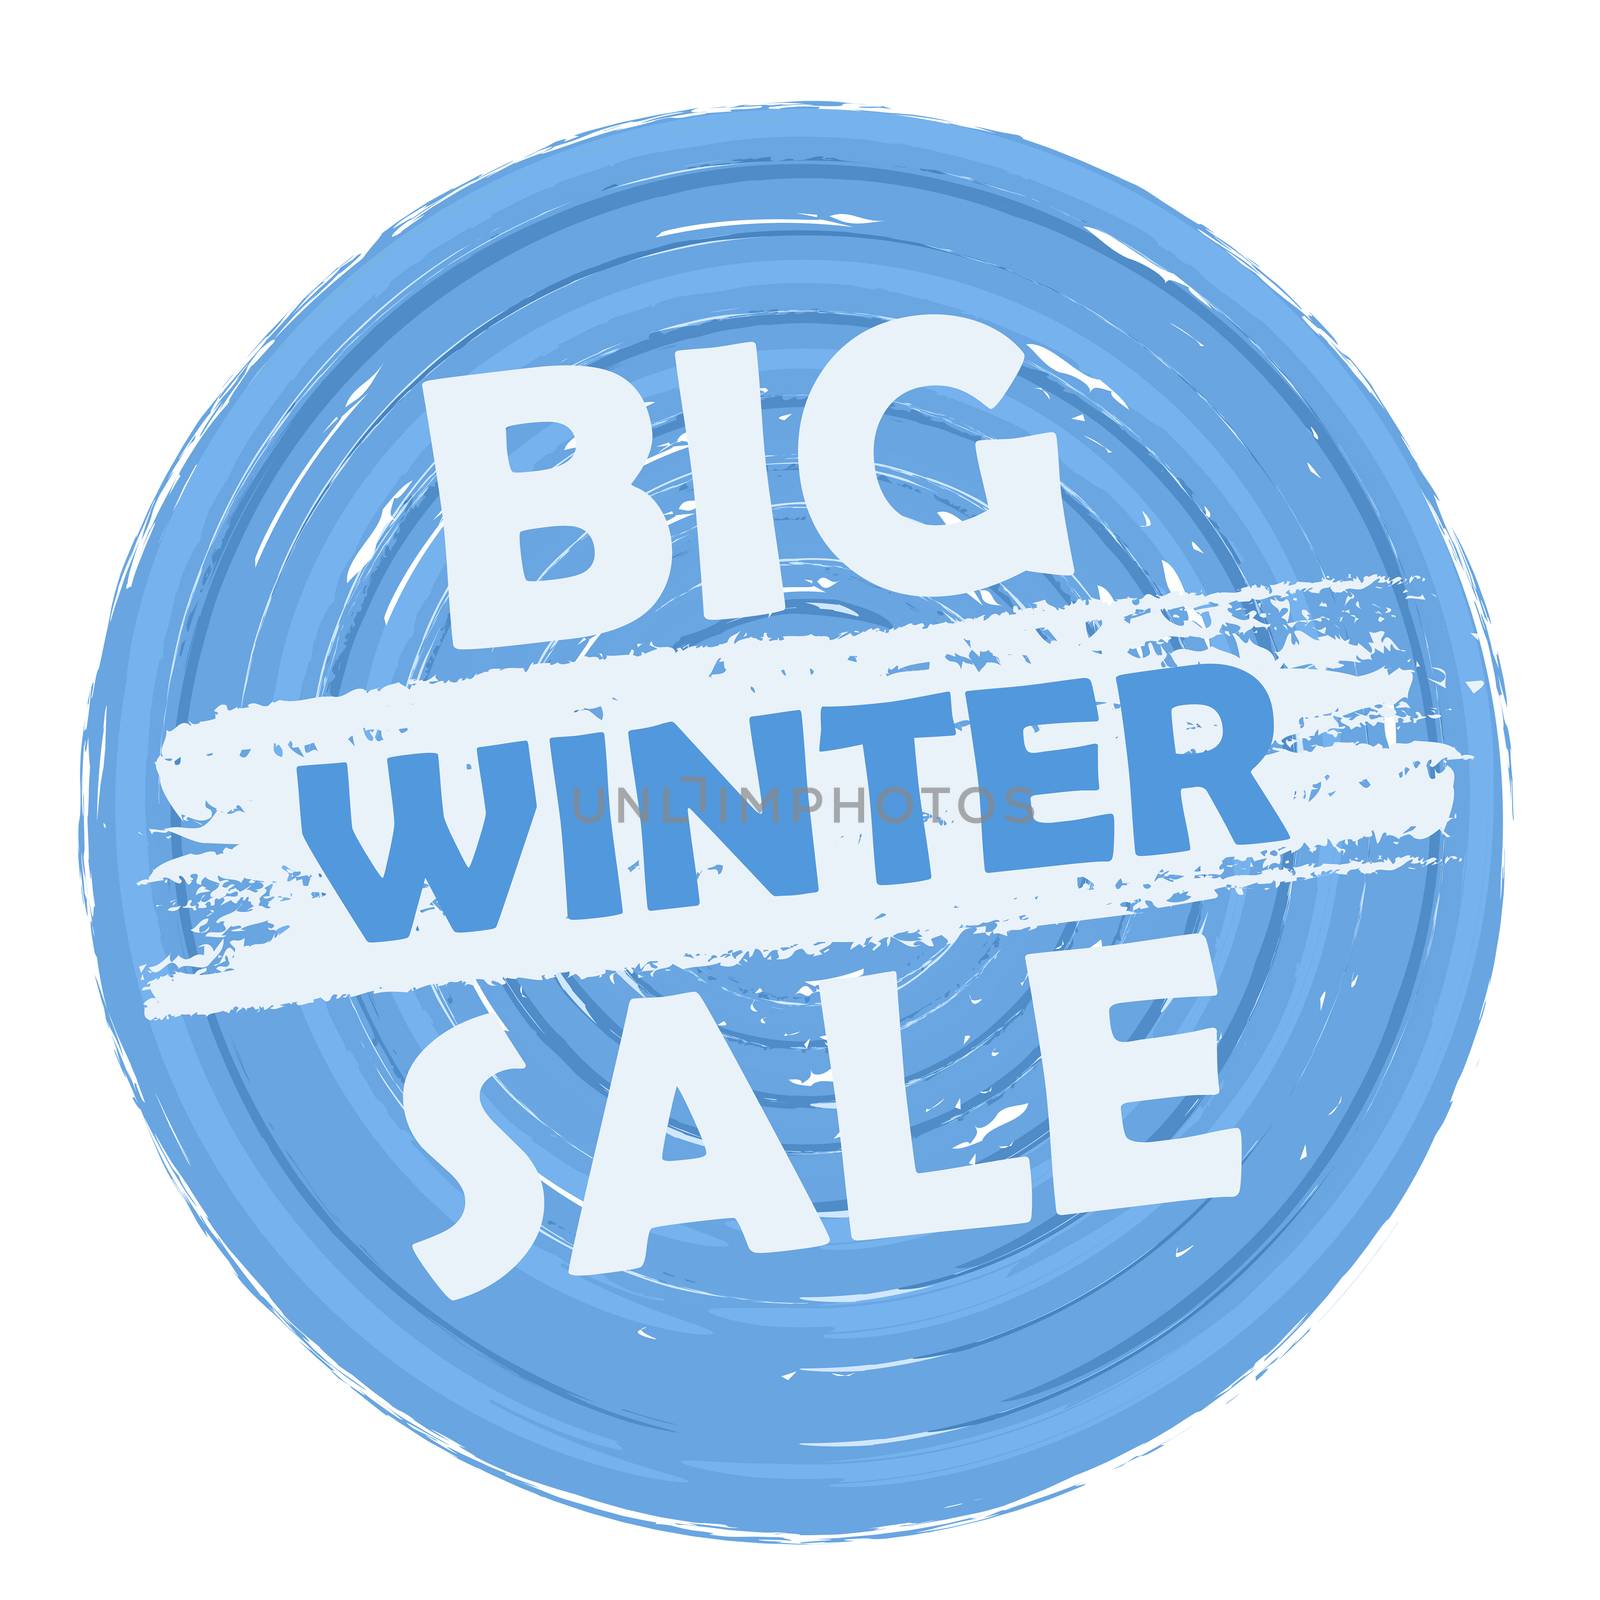 Big winter sale - text in drawn circle label